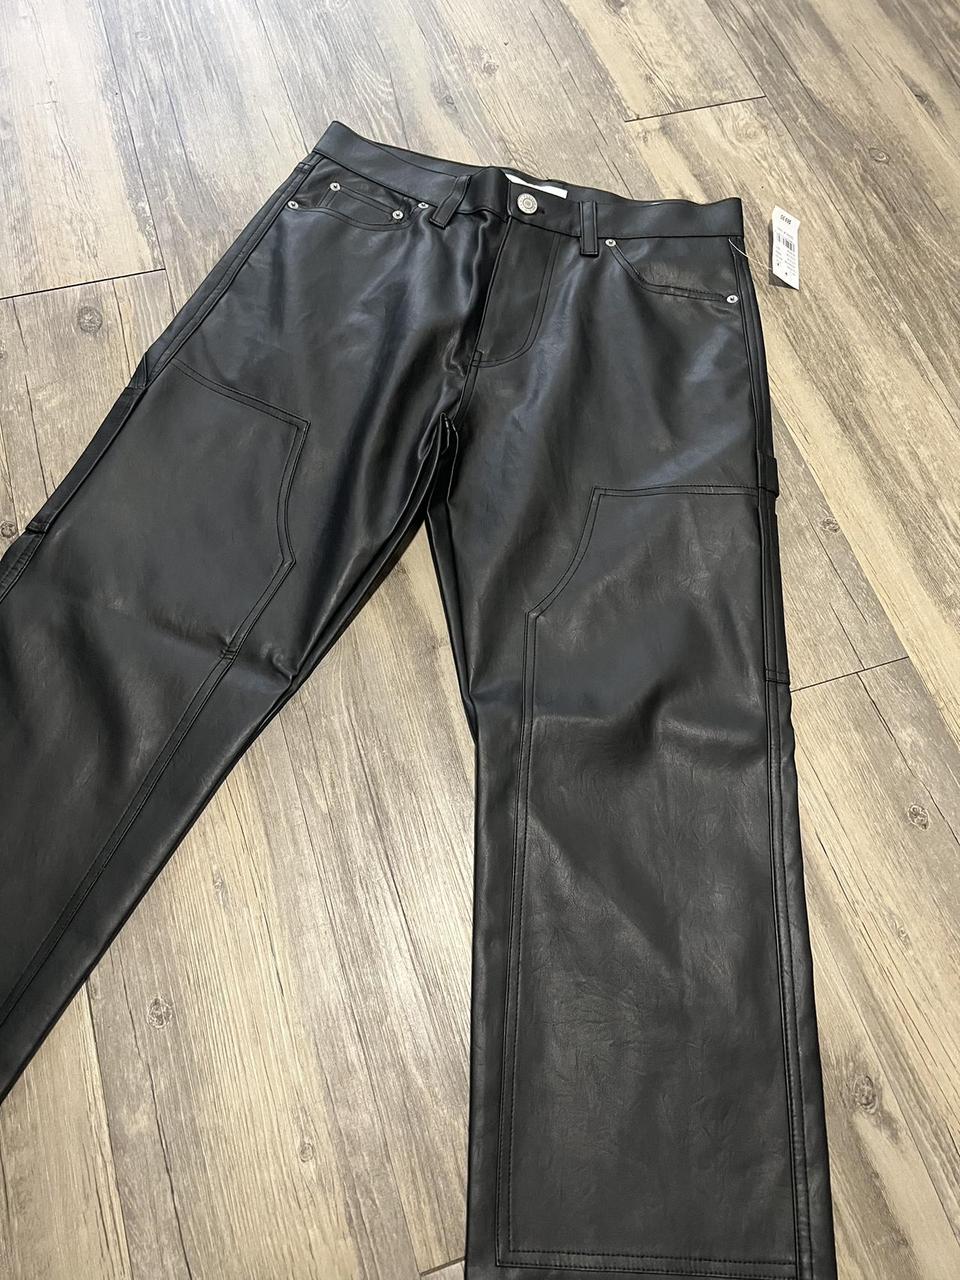 Pacsun double knee faux leather pants 30/32 Brand new - Depop